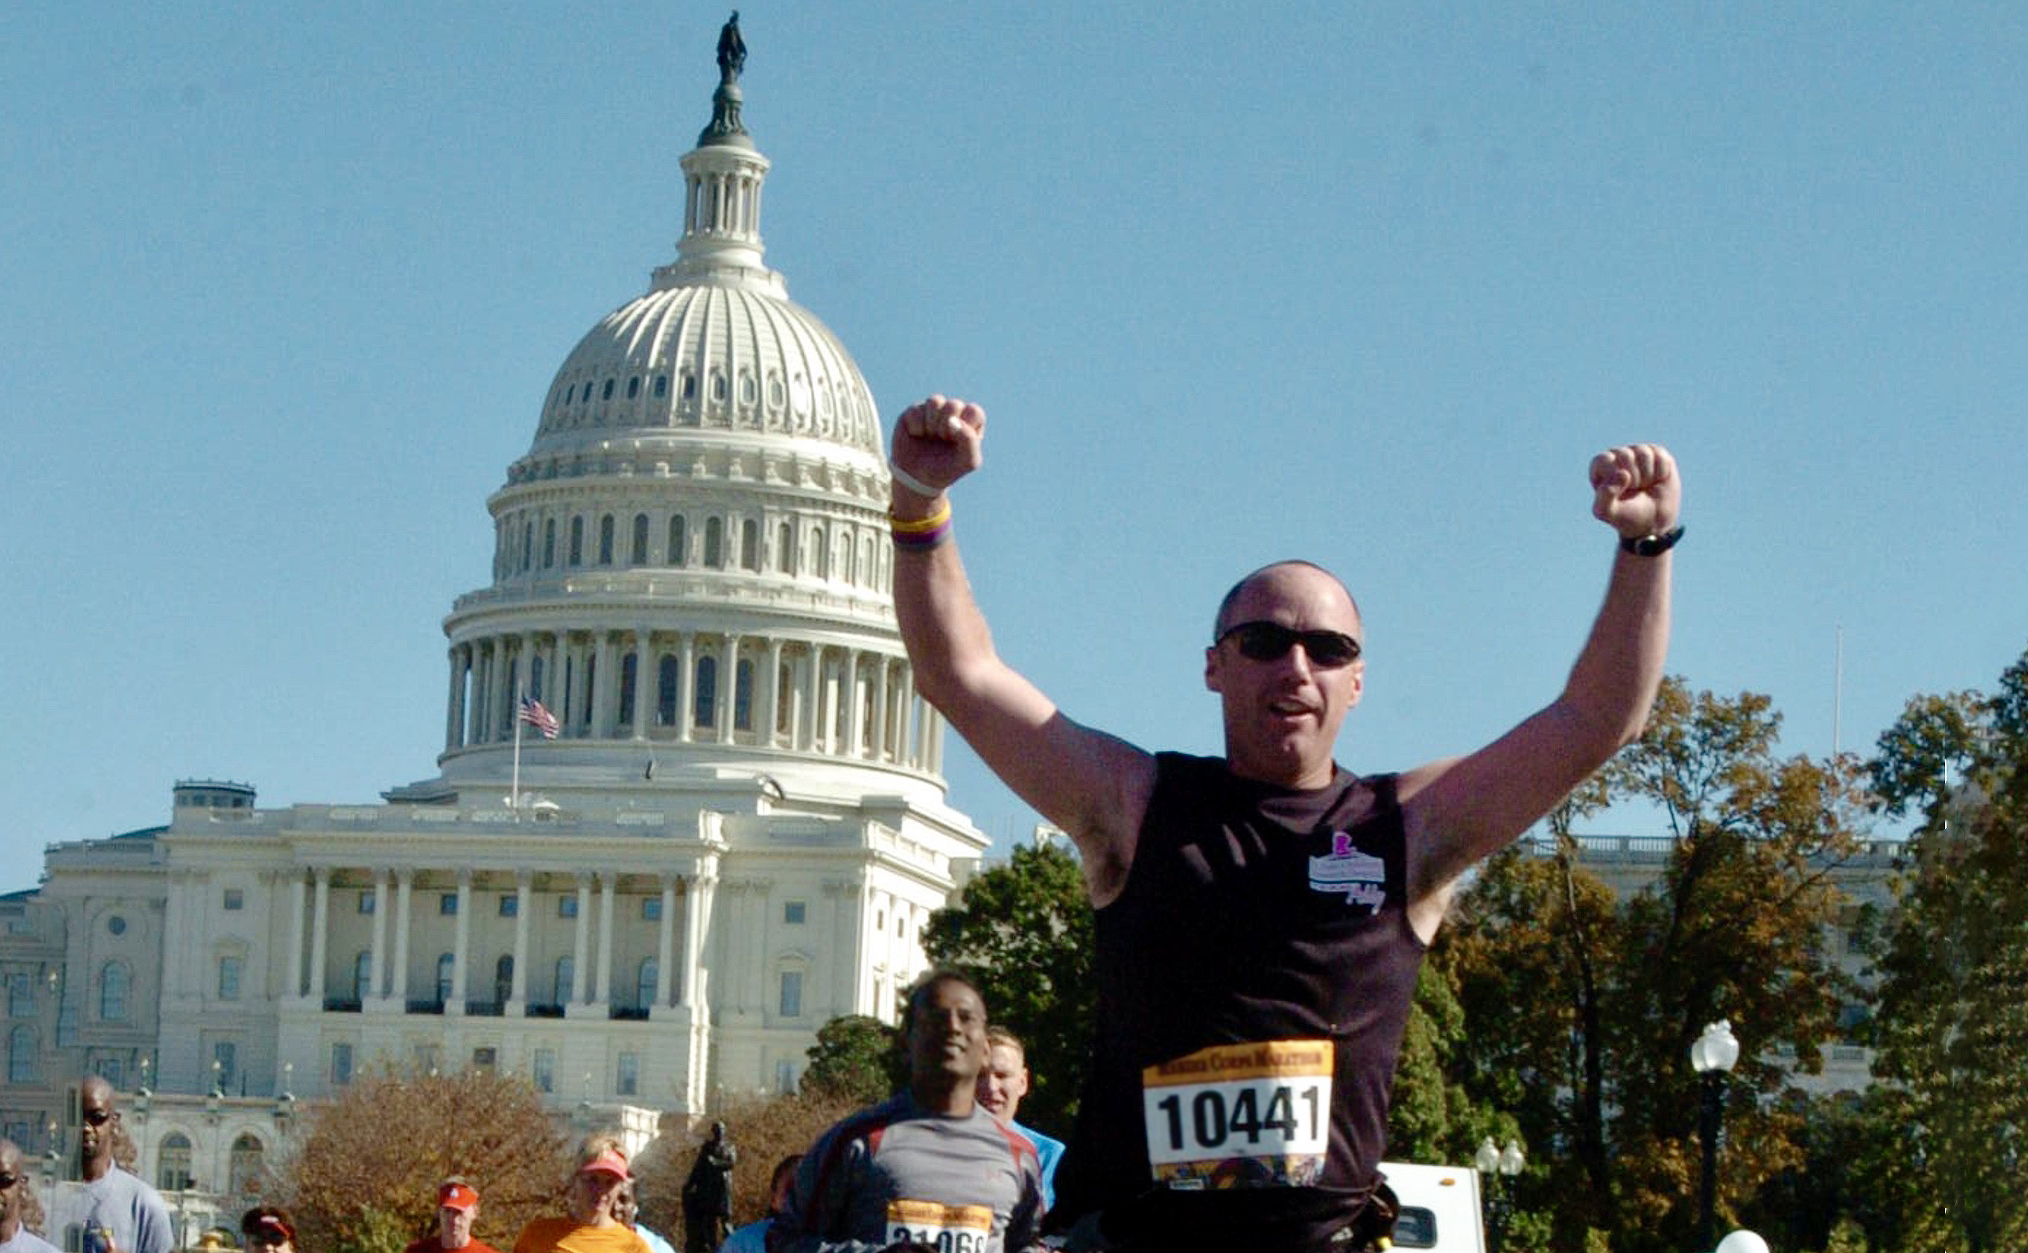 Firefighter&#8217;s Care Inspires Boston Marathon Run